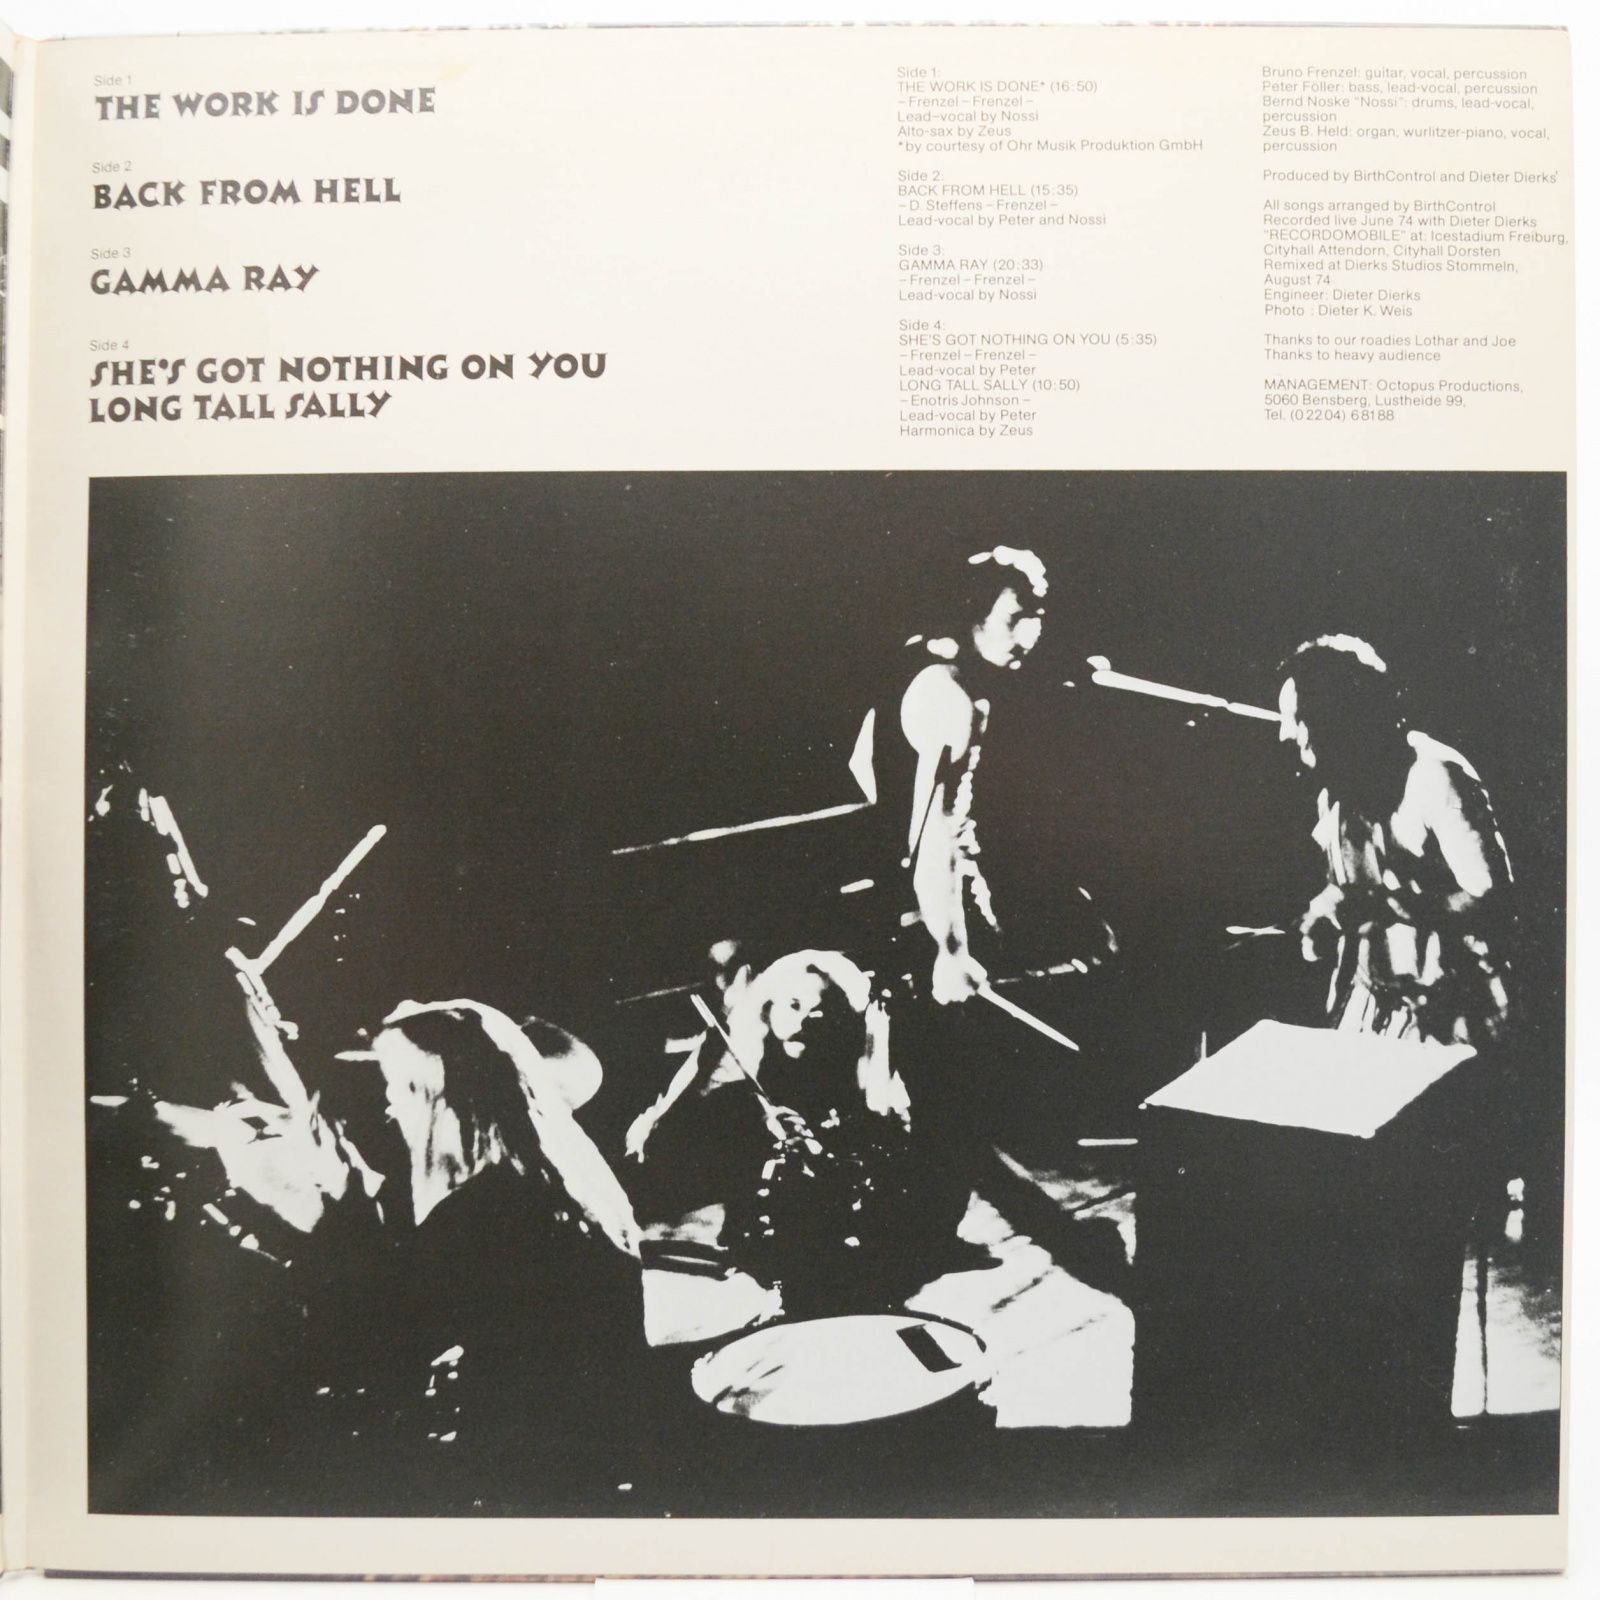 Birthcontrol — Live (2LP), 1974